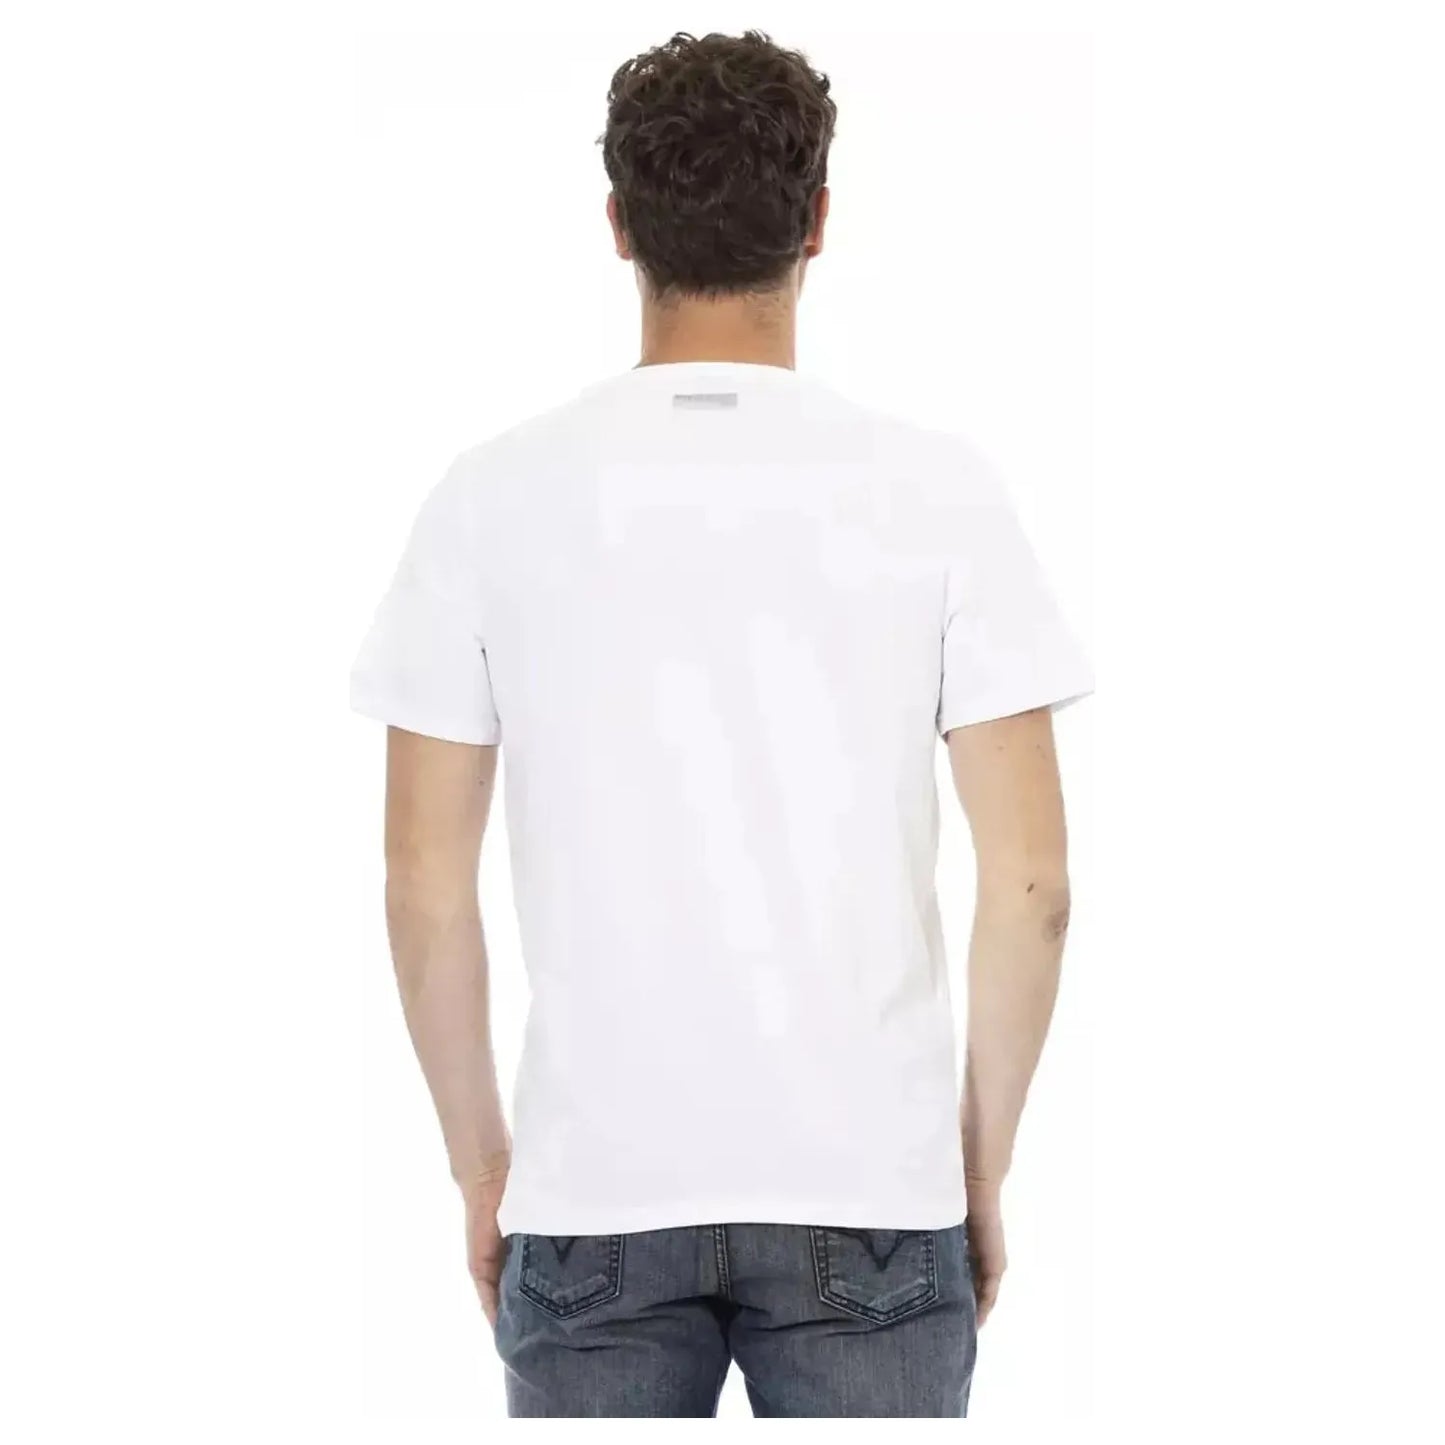 Bikkembergs Sleek White Printed Cotton Tee white-cotton-t-shirt-8